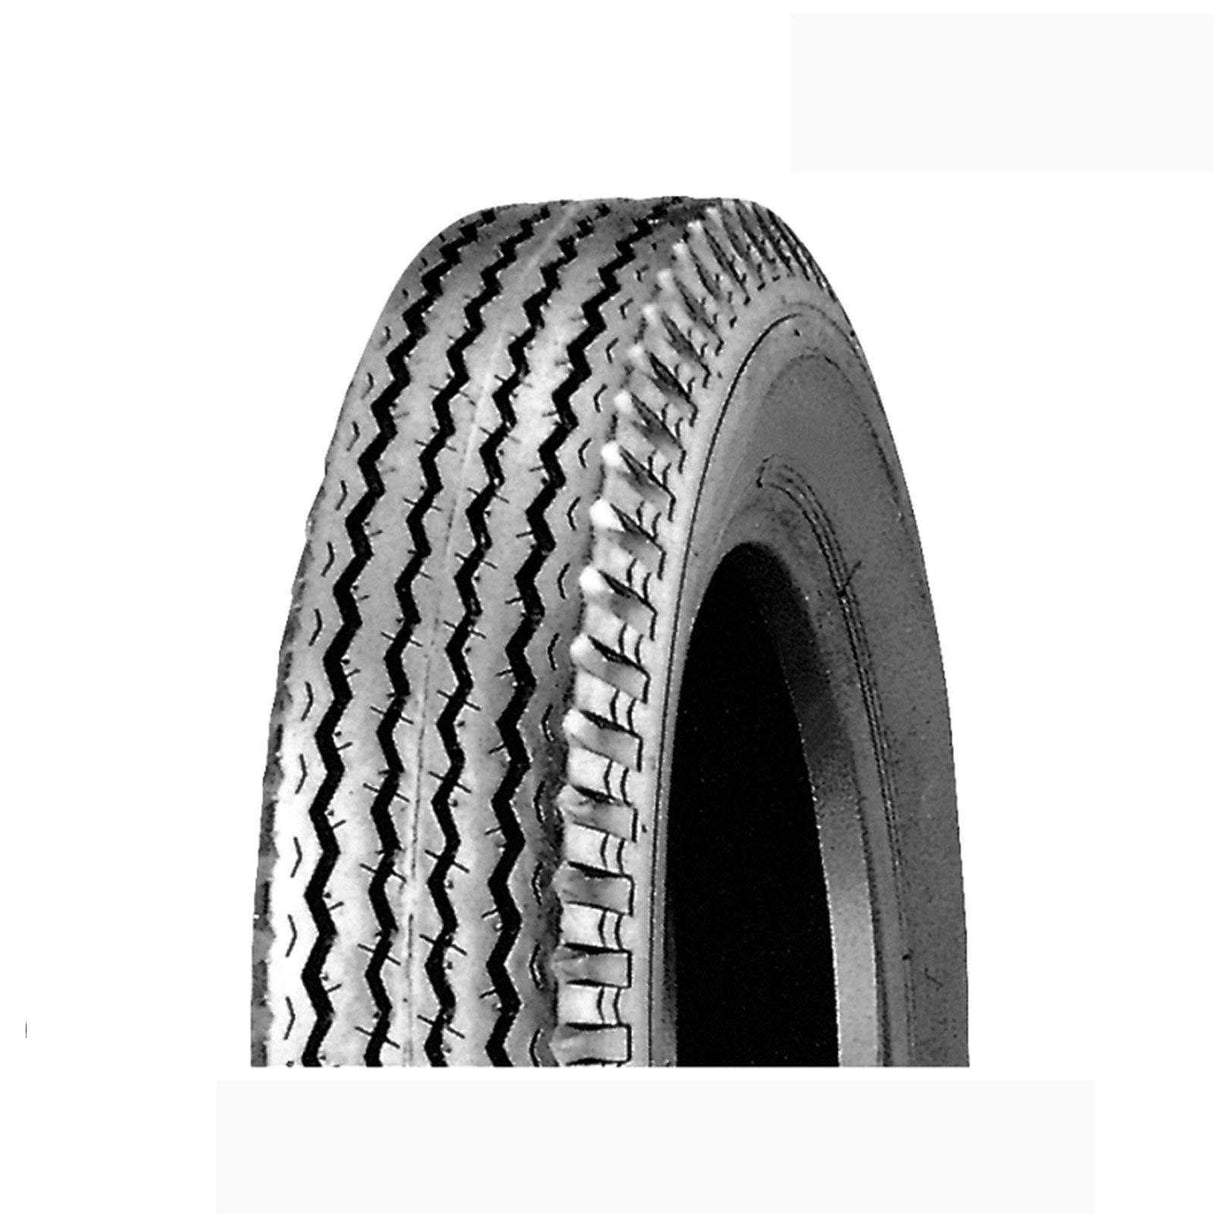 5.70-8 (6 PLY) K353 Kenda Highway Tyre